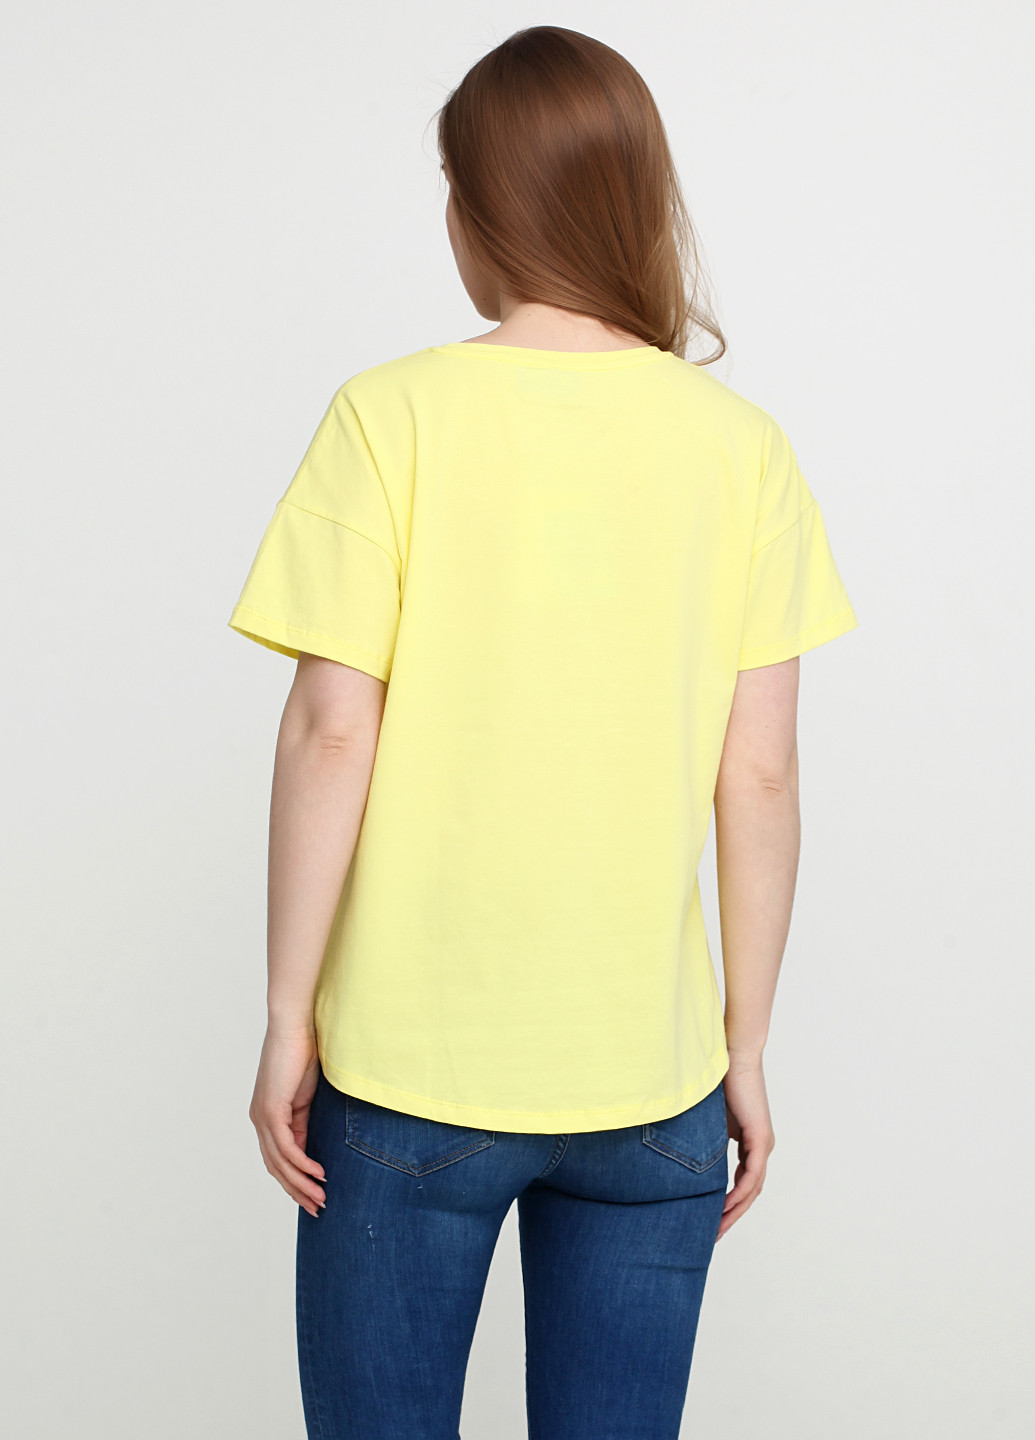 Желтая летняя футболка Monte Cervino